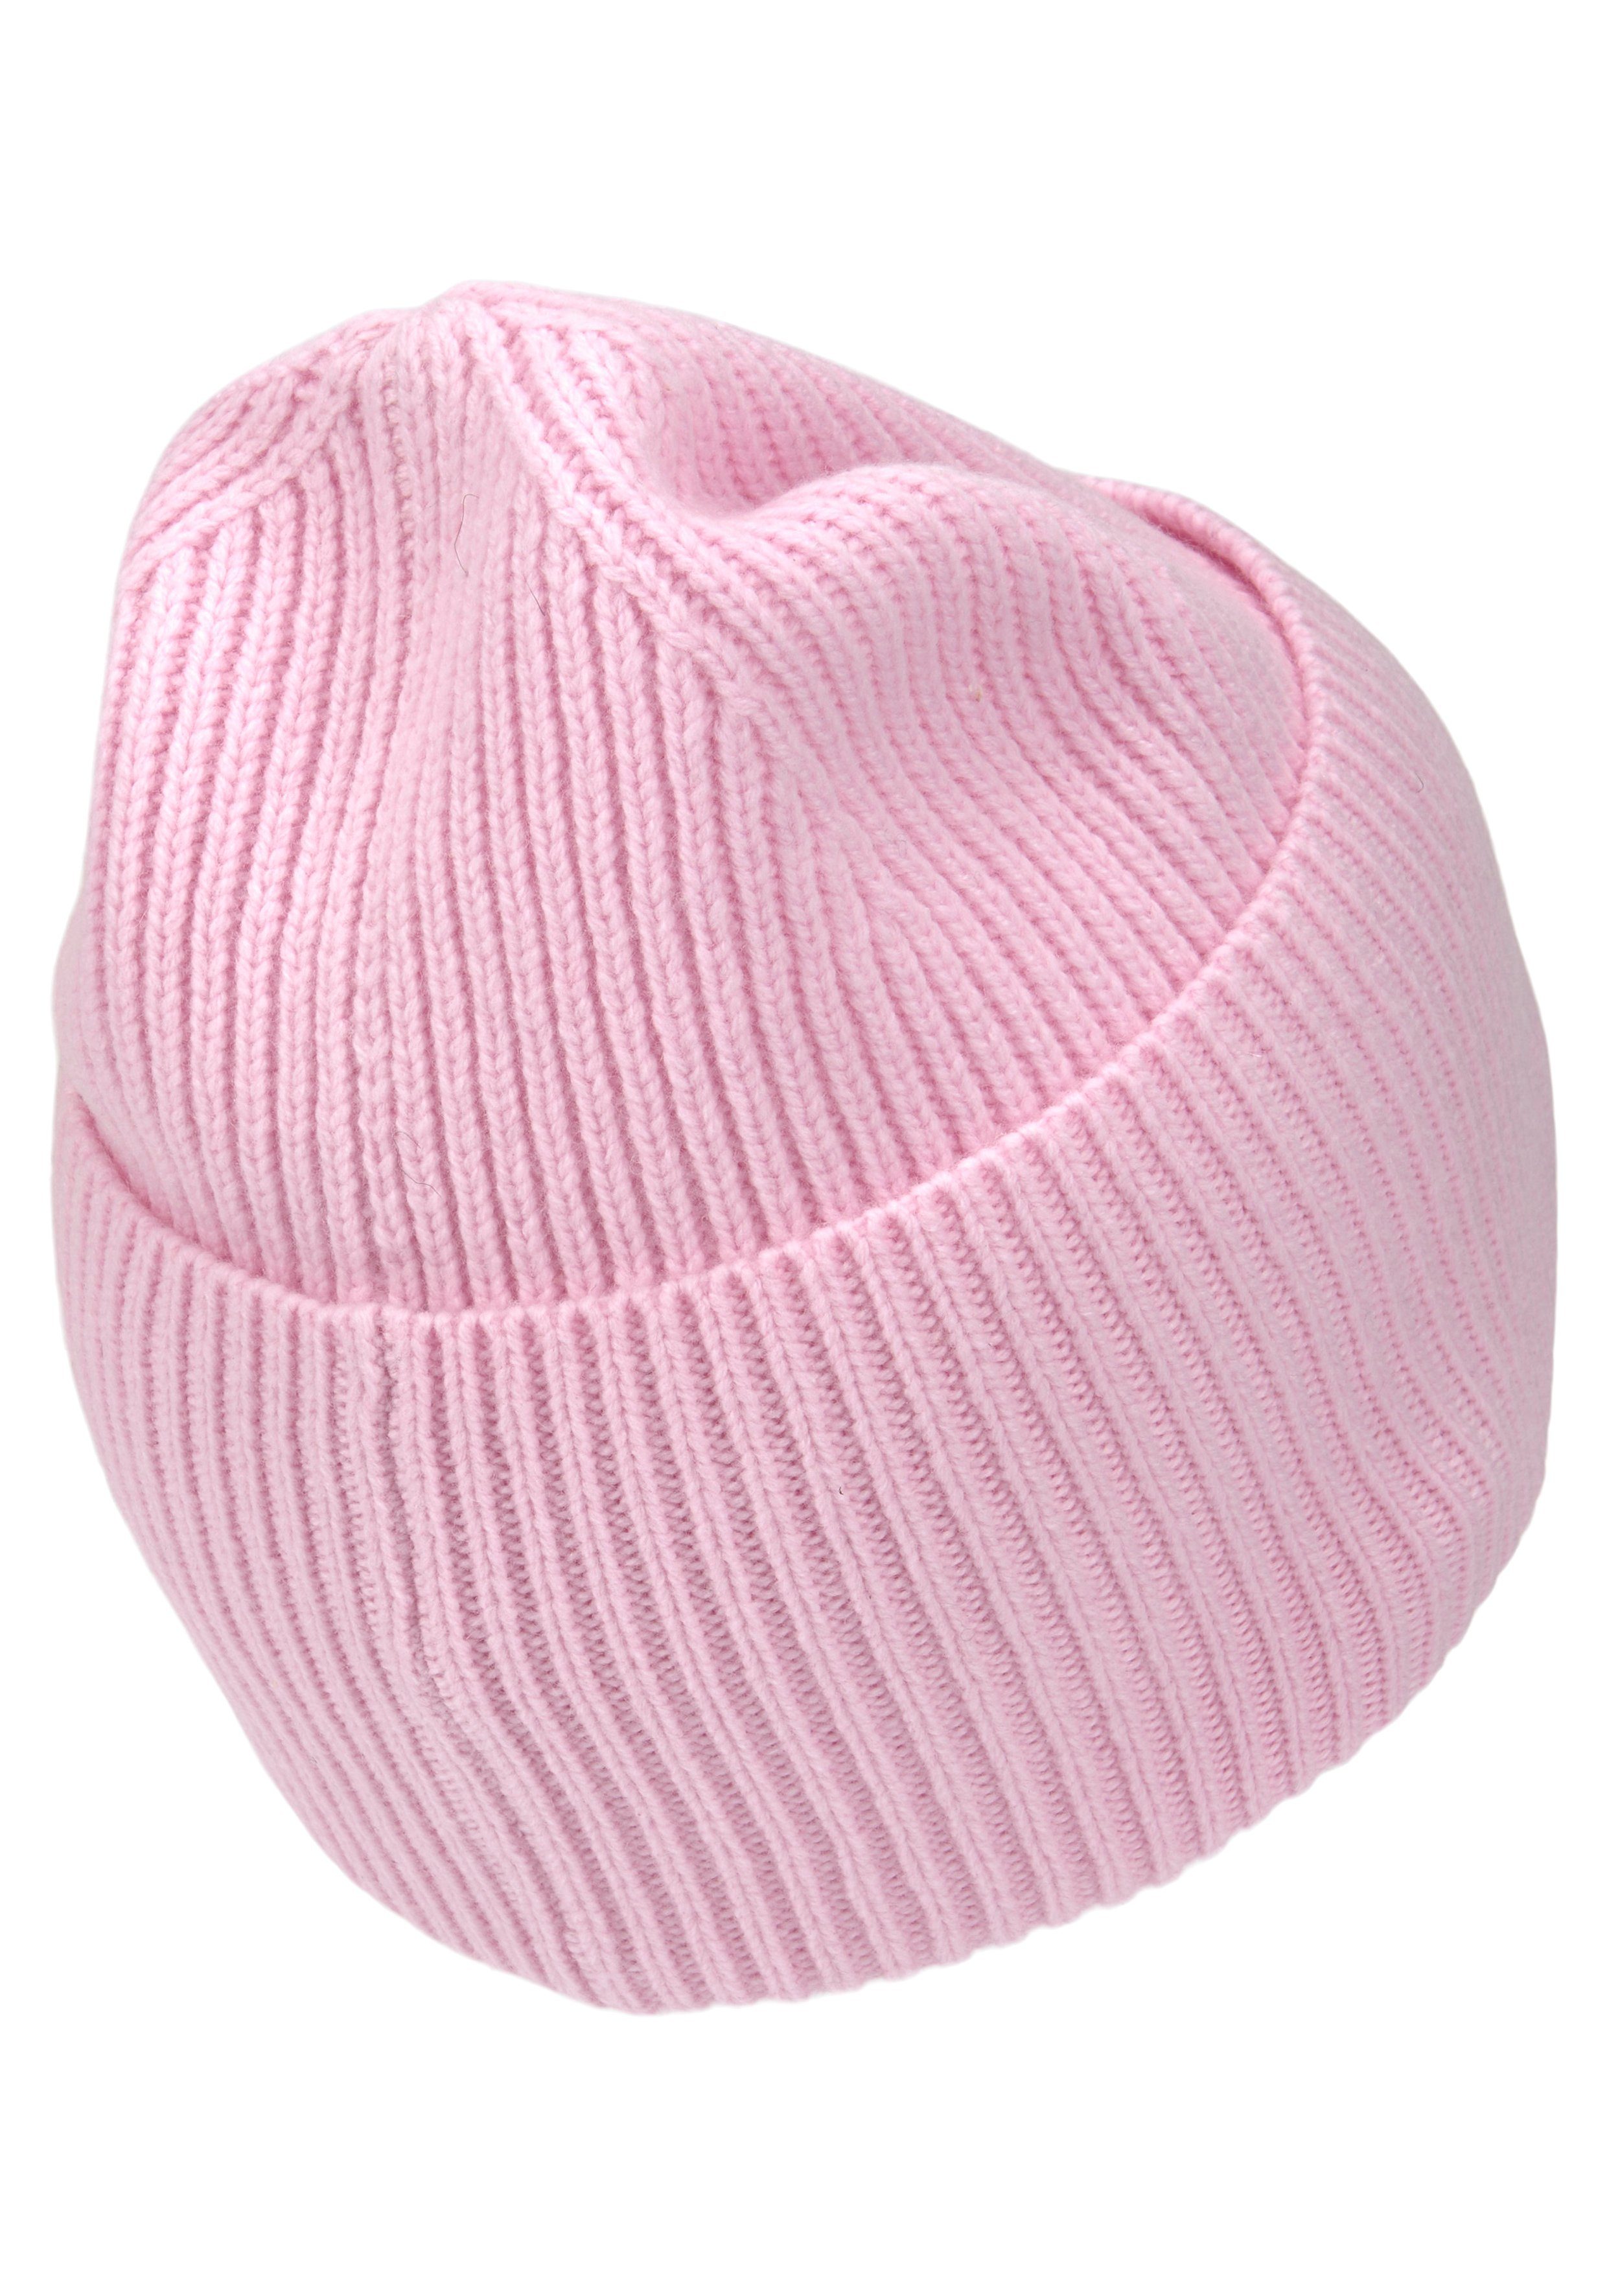 10253885 0 Beanie pink Saffa rotem Logo mit HUGO HUGO hat